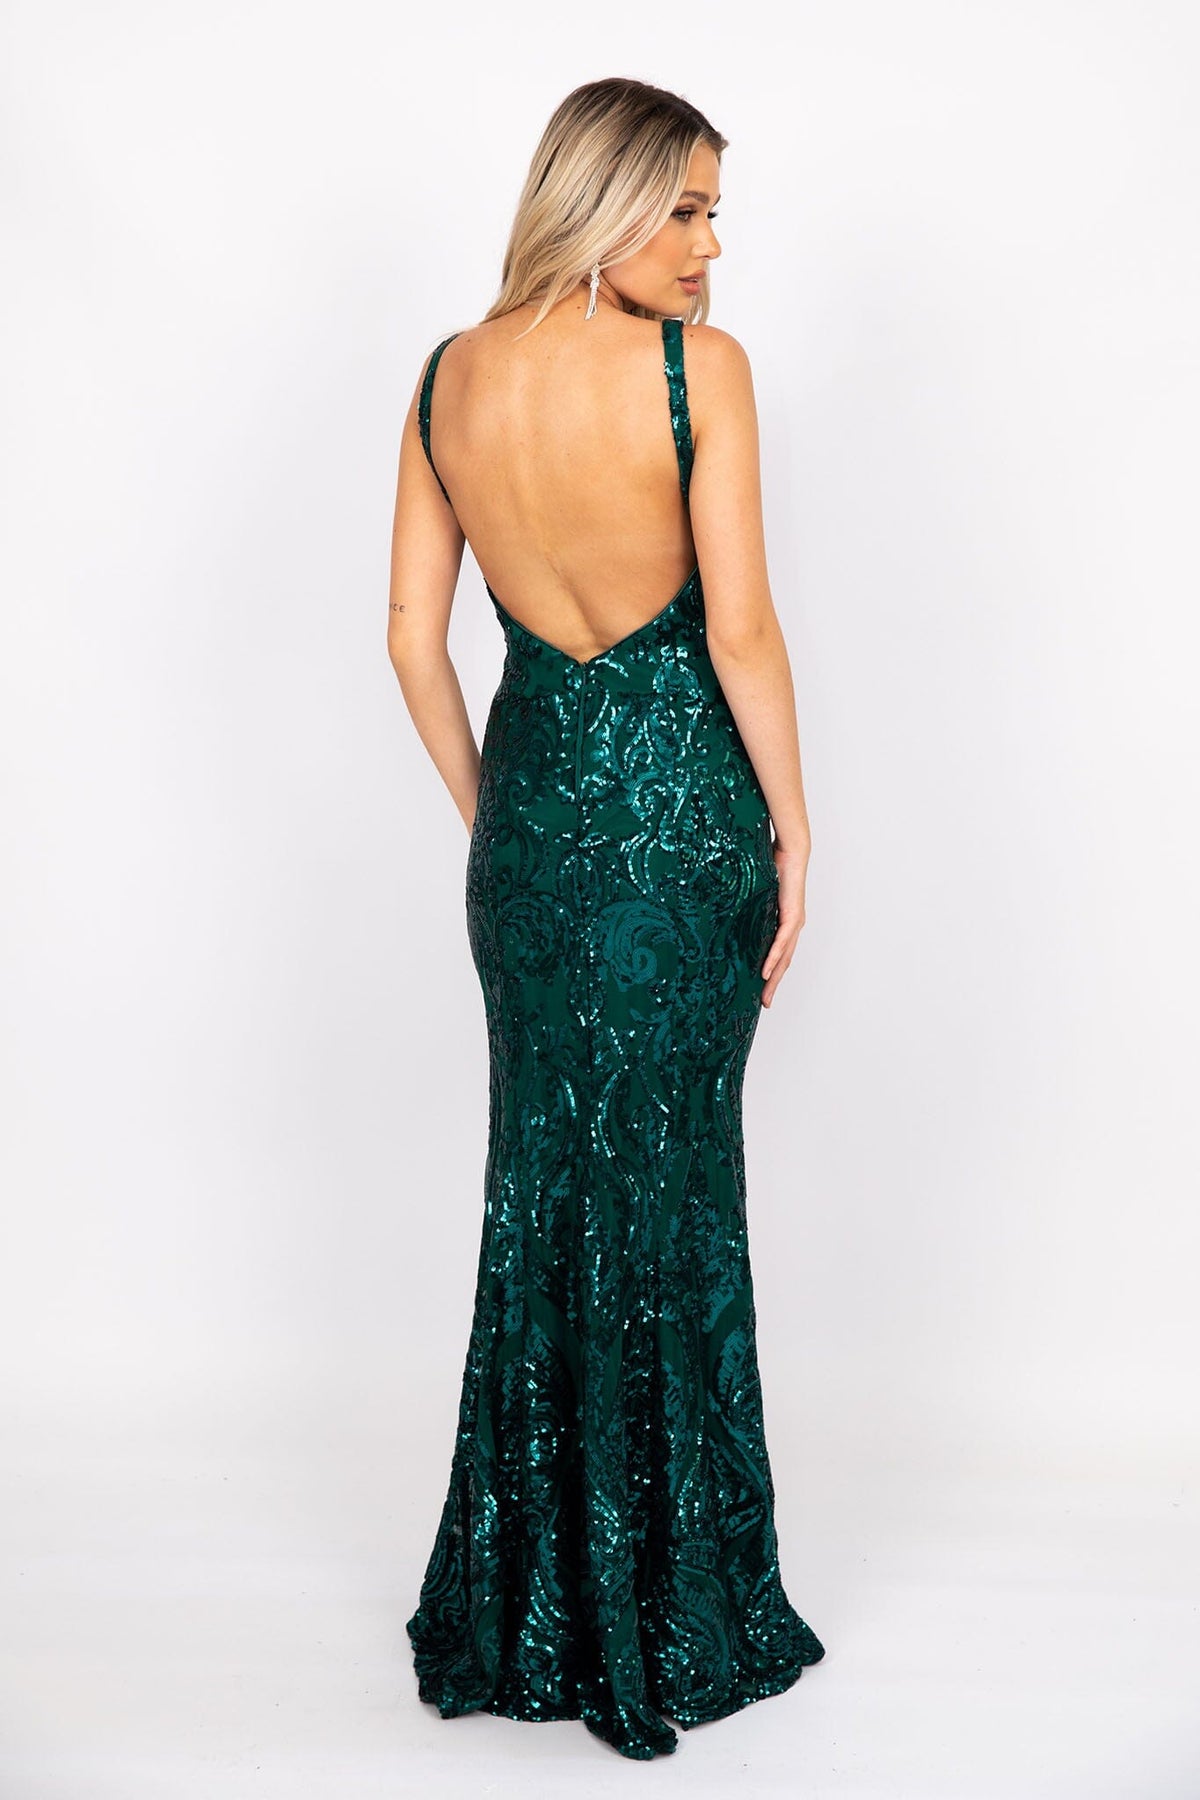 Backless Design of Emerald Green Pattern Sequinned Floor Length Formal Gown V Neckline and V Open Back